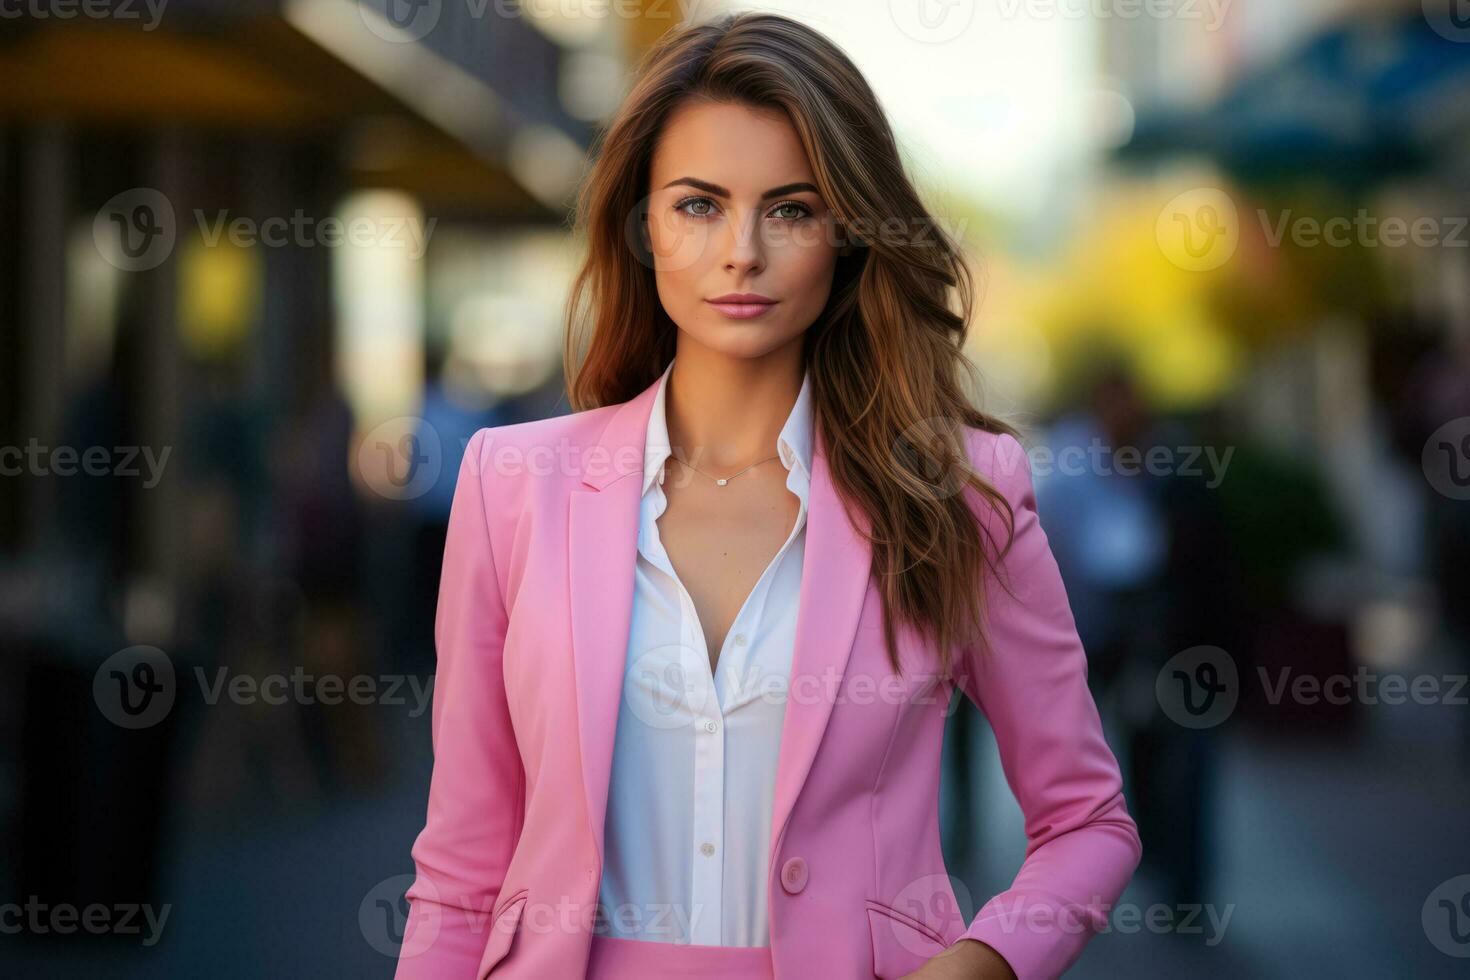 Businesswoman sporting pink blazer working office ambiance summarized in 10 words photo